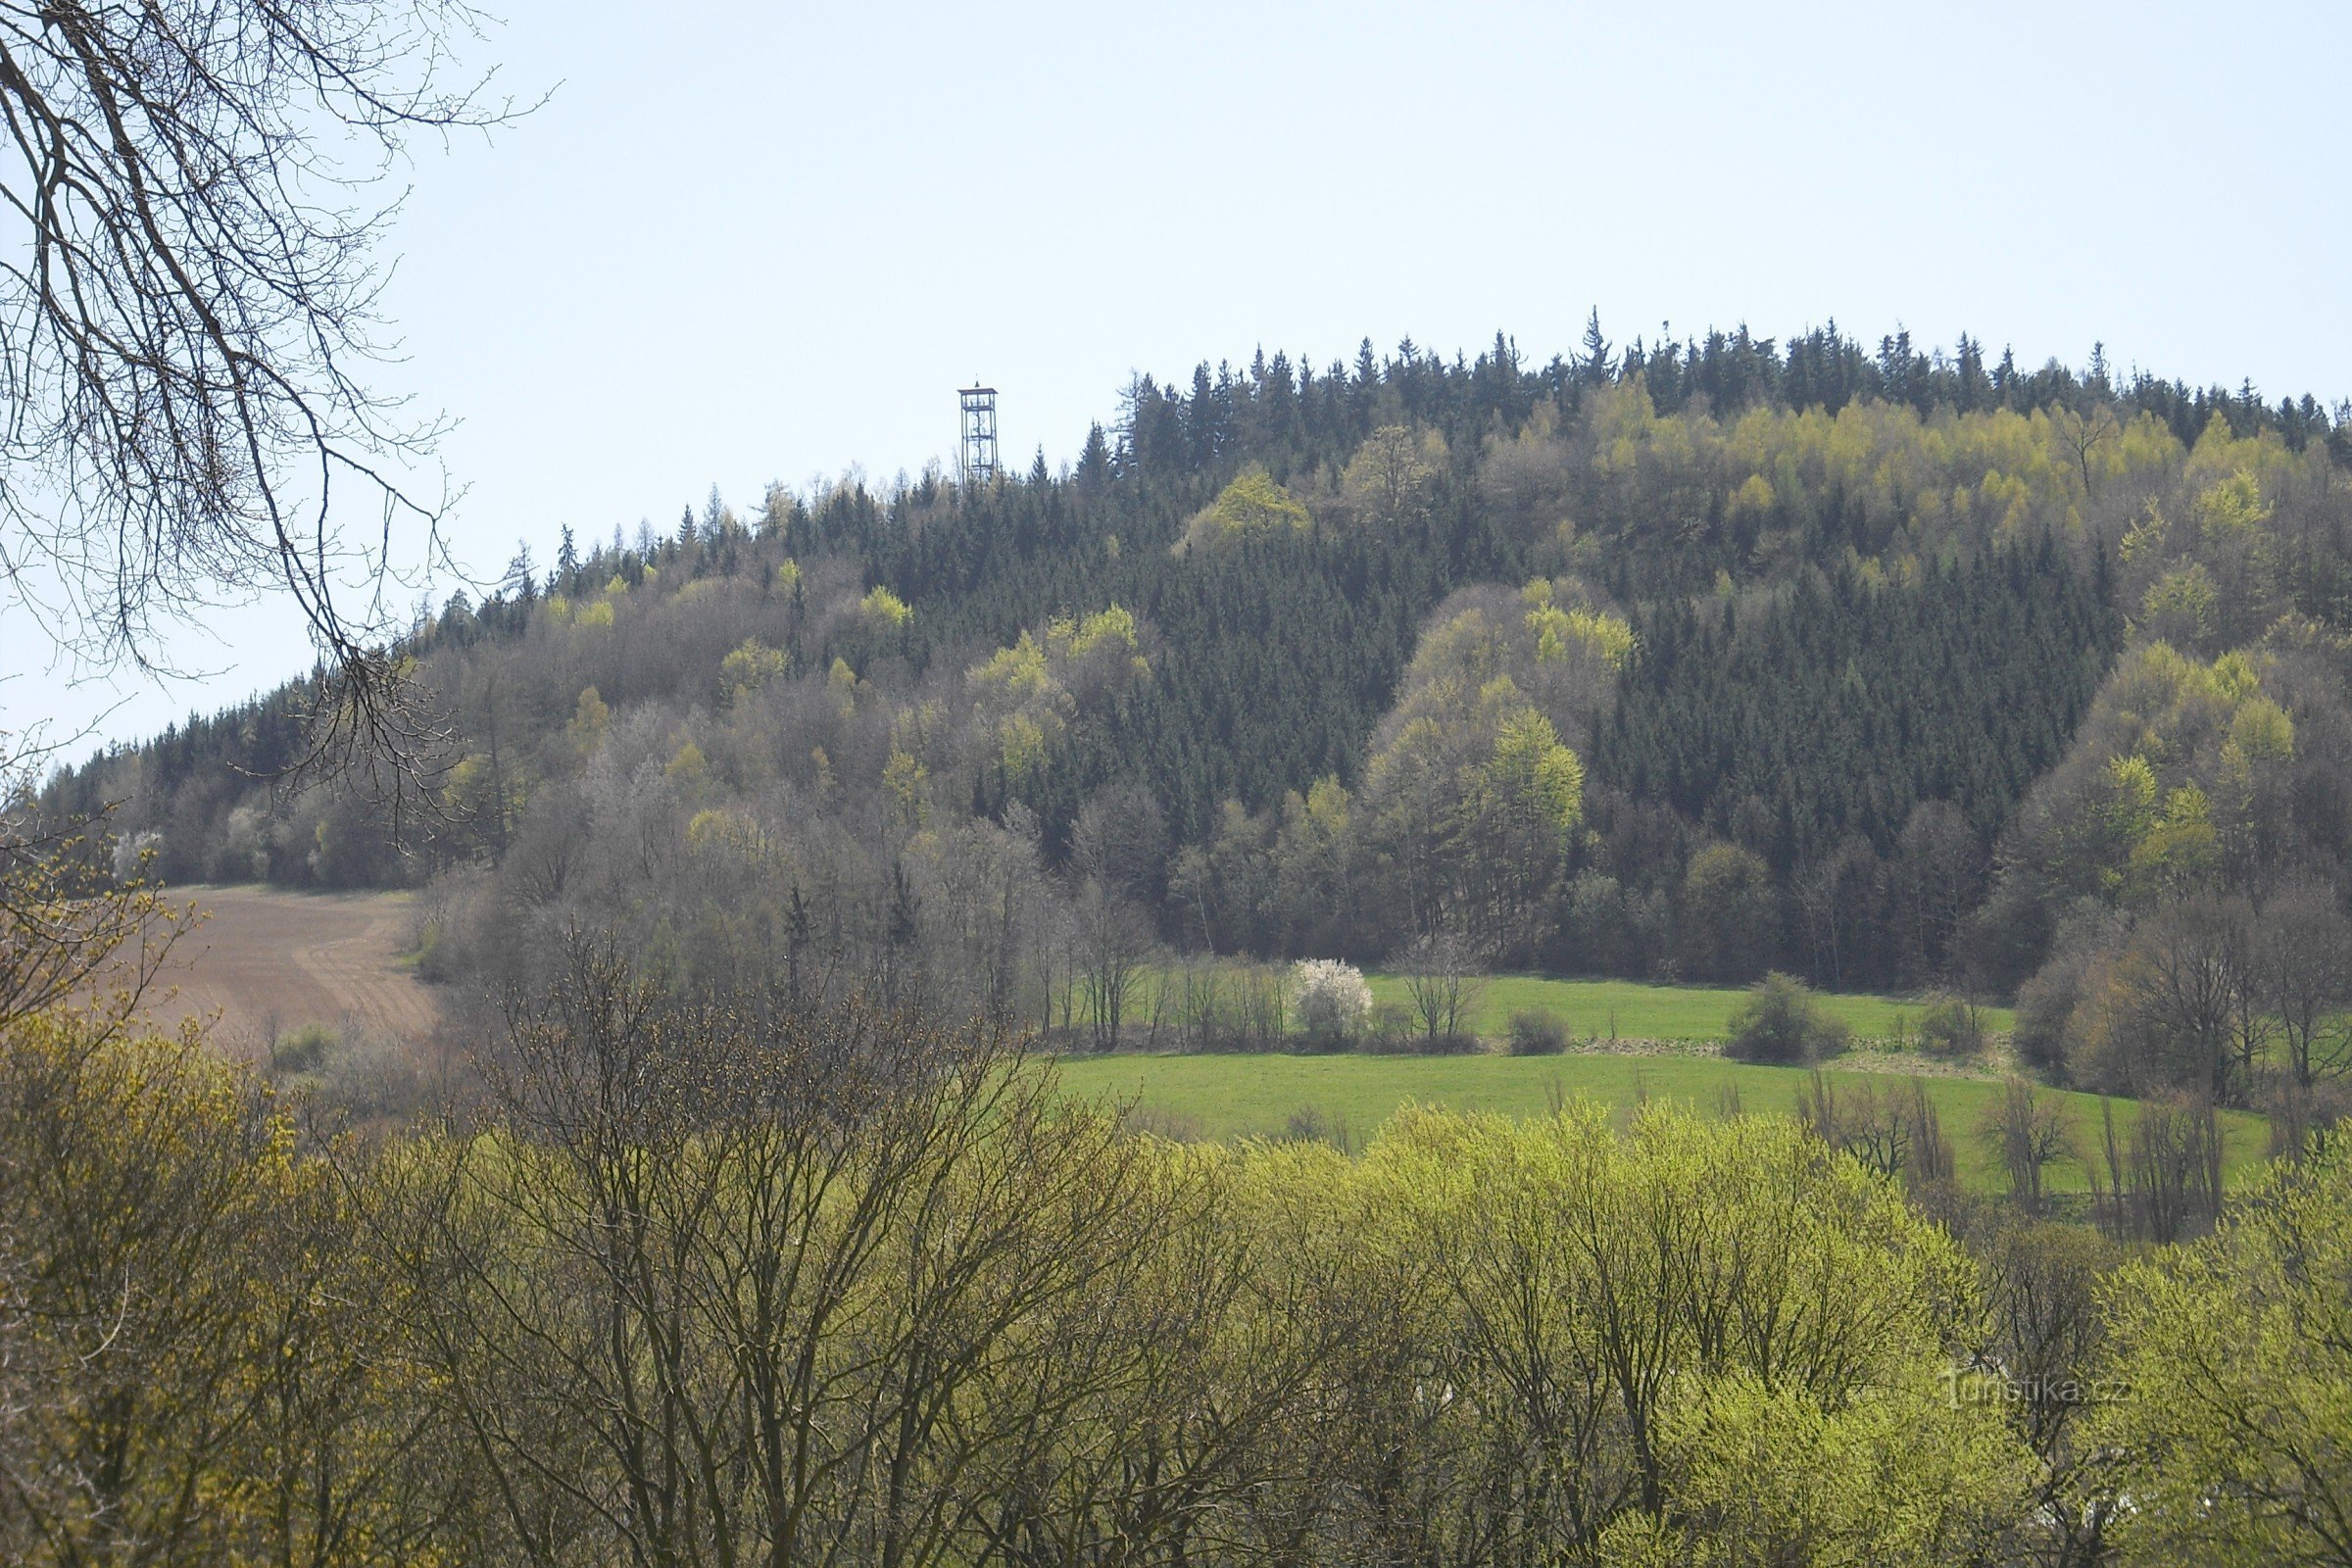 Torre de vigilancia Pastýřka cerca de Moravská Třebová